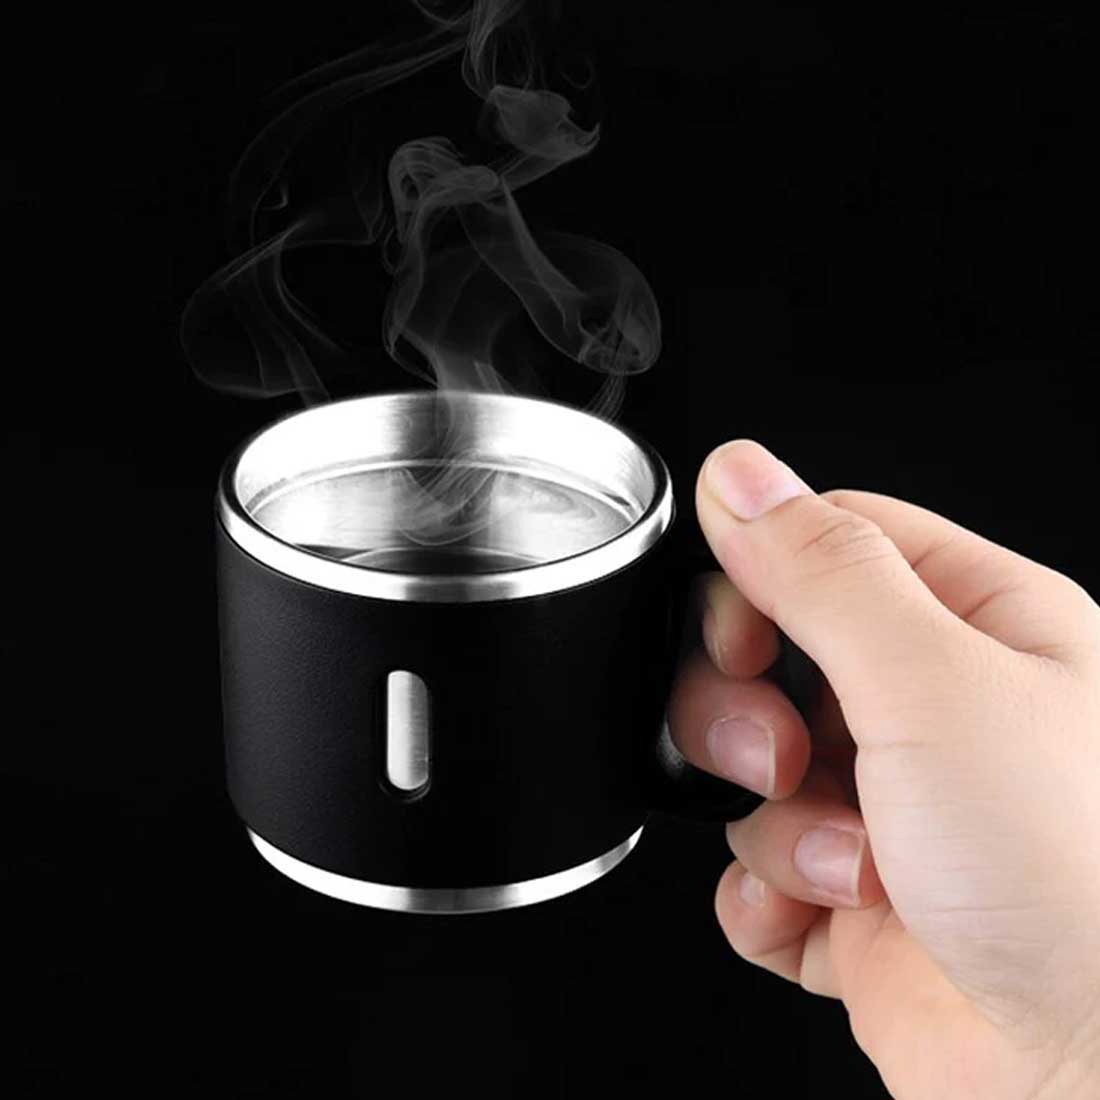 Custom Travel Mug Thermos With 2 Cups Gift Box Set - Add Name